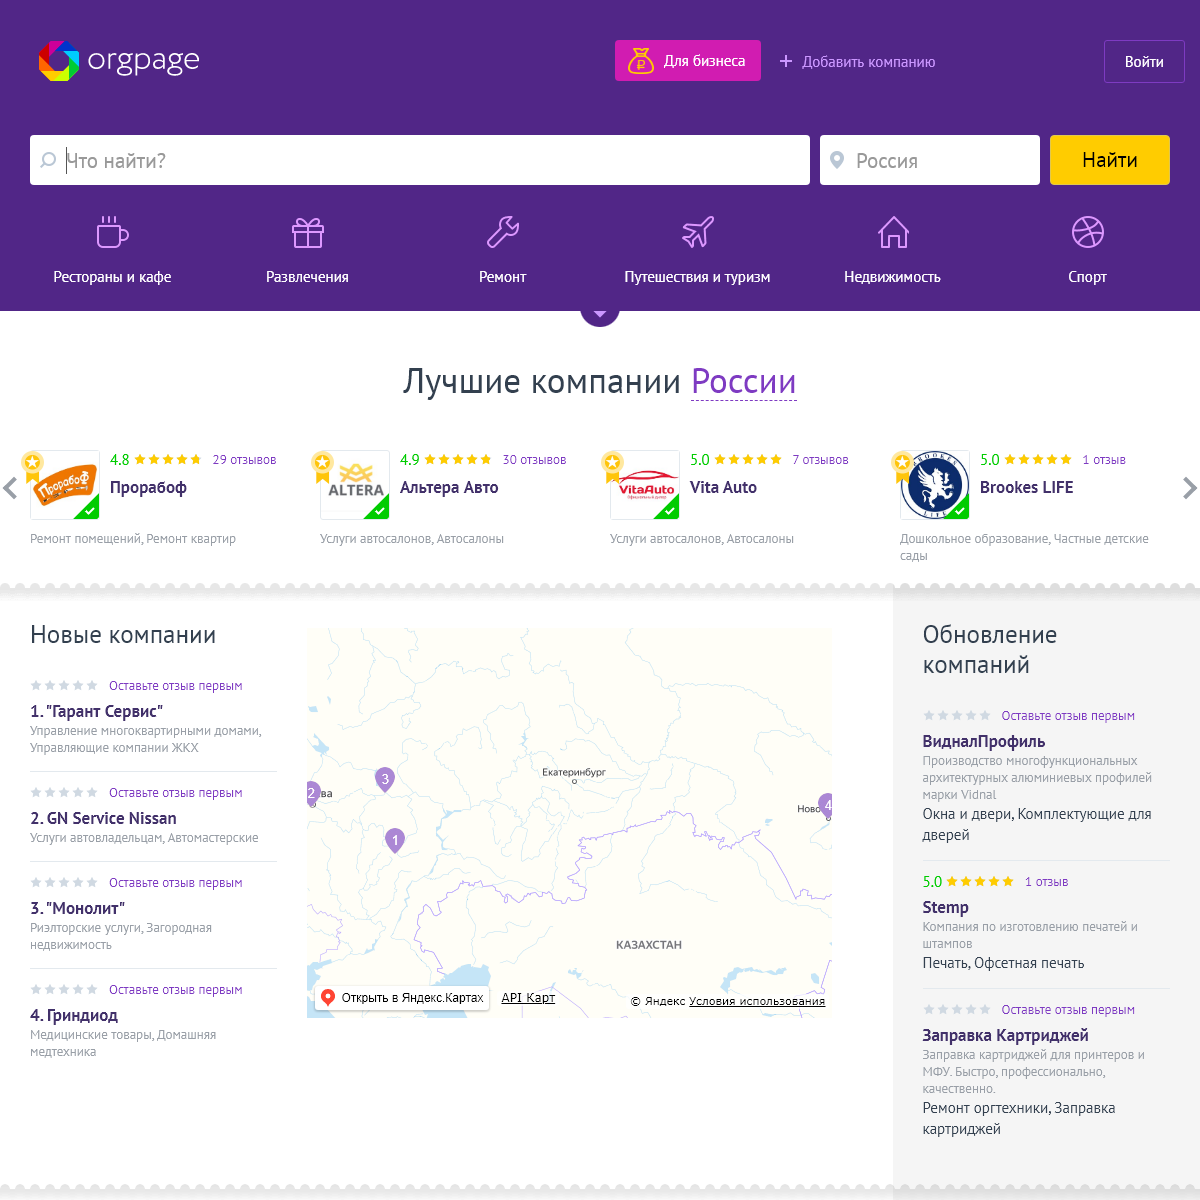 A complete backup of orgpage.ru